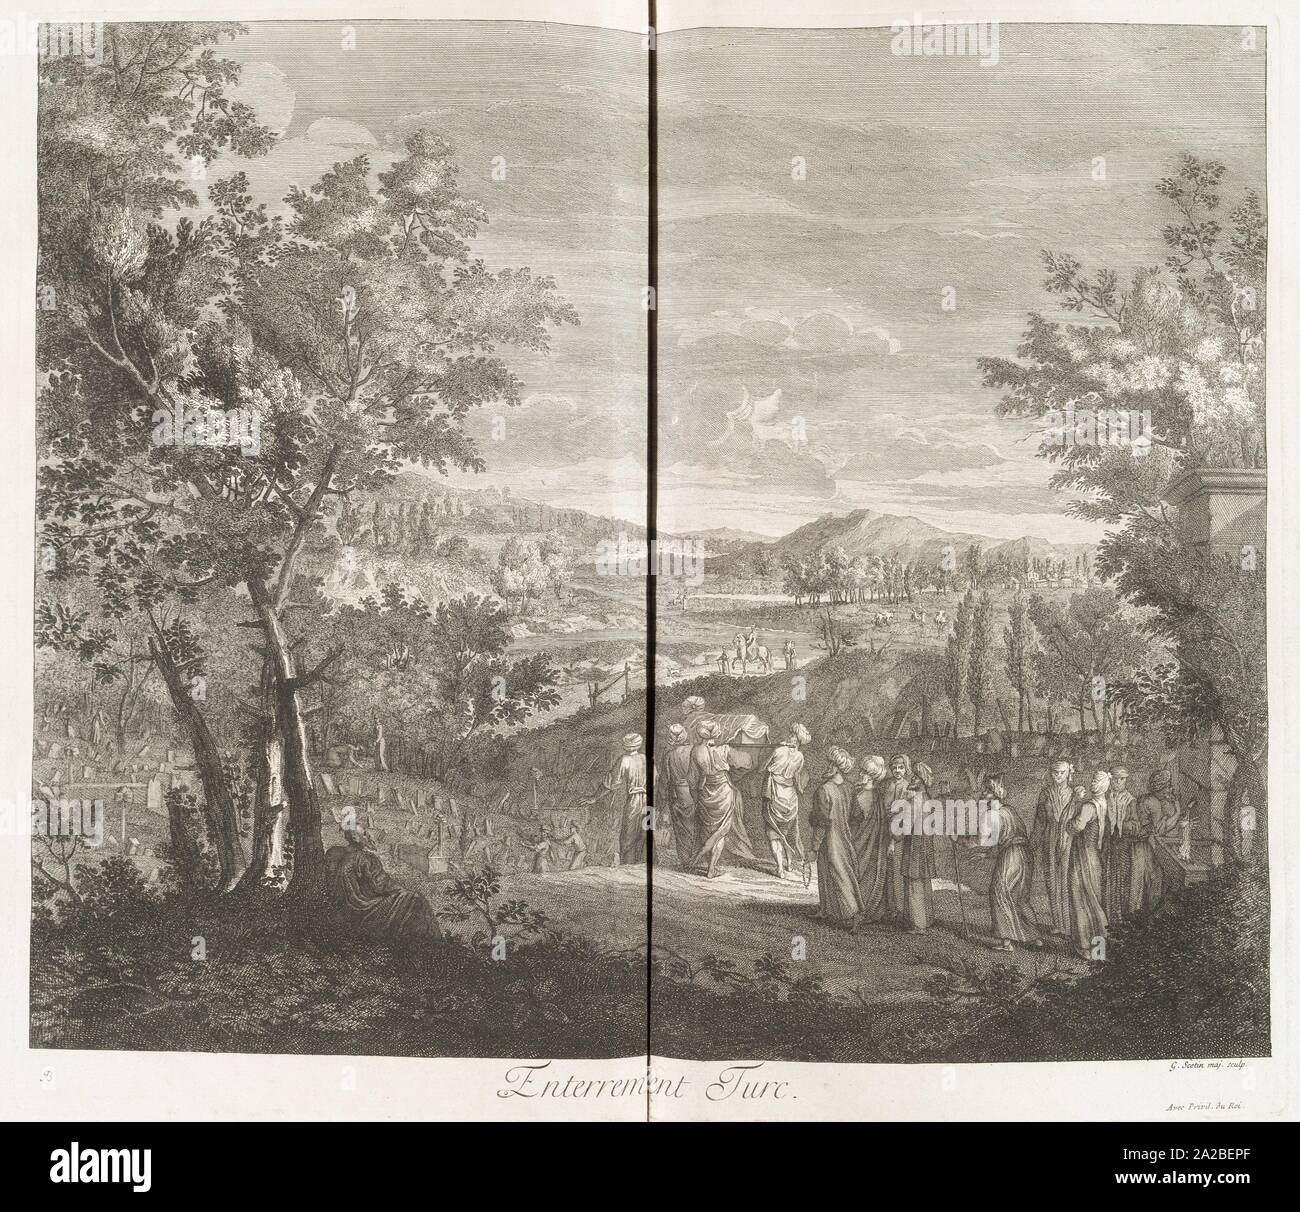 Enterrement turc. Vanmour, Jean-Baptiste, 1671-1737 (Artista) Scotin, G. (Gérard) (1643-1715) (incisore). Recueil de cent estampes rappresentante Foto Stock